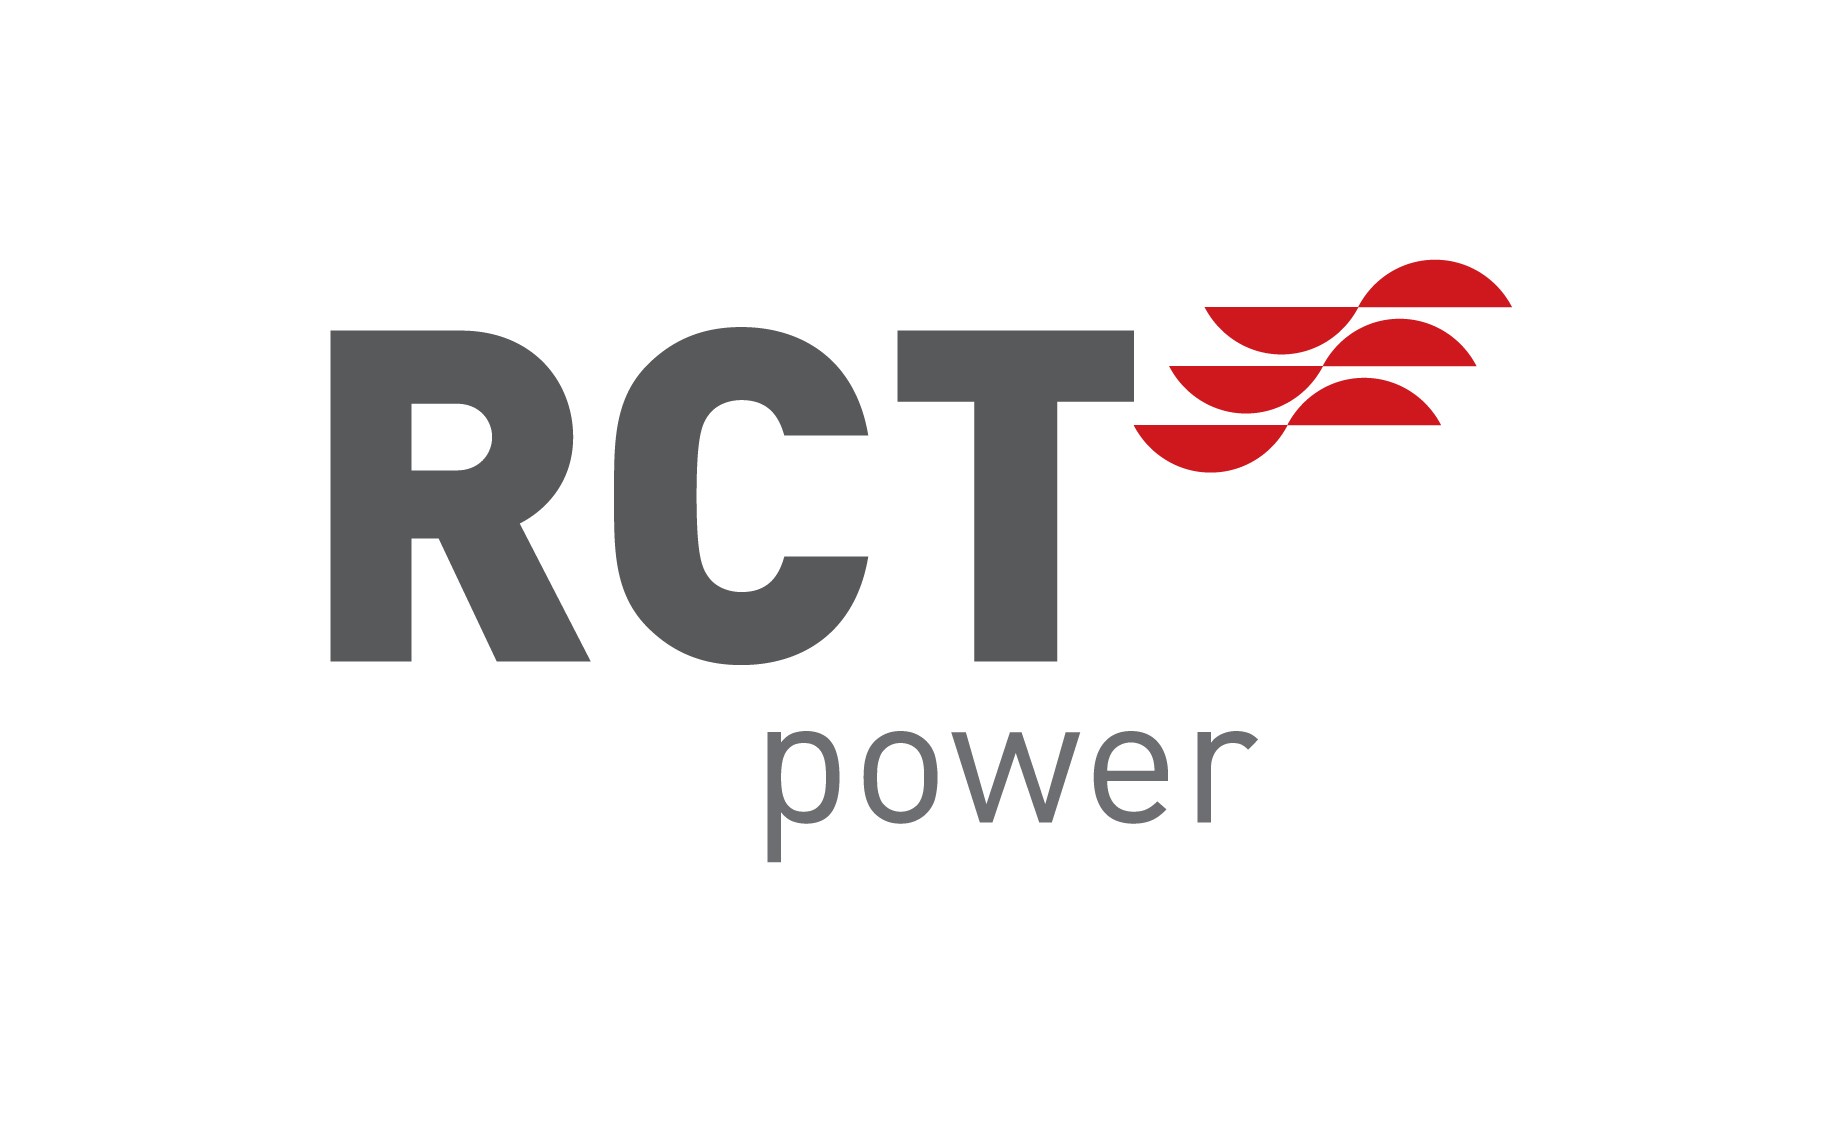 RCT Power GmbH